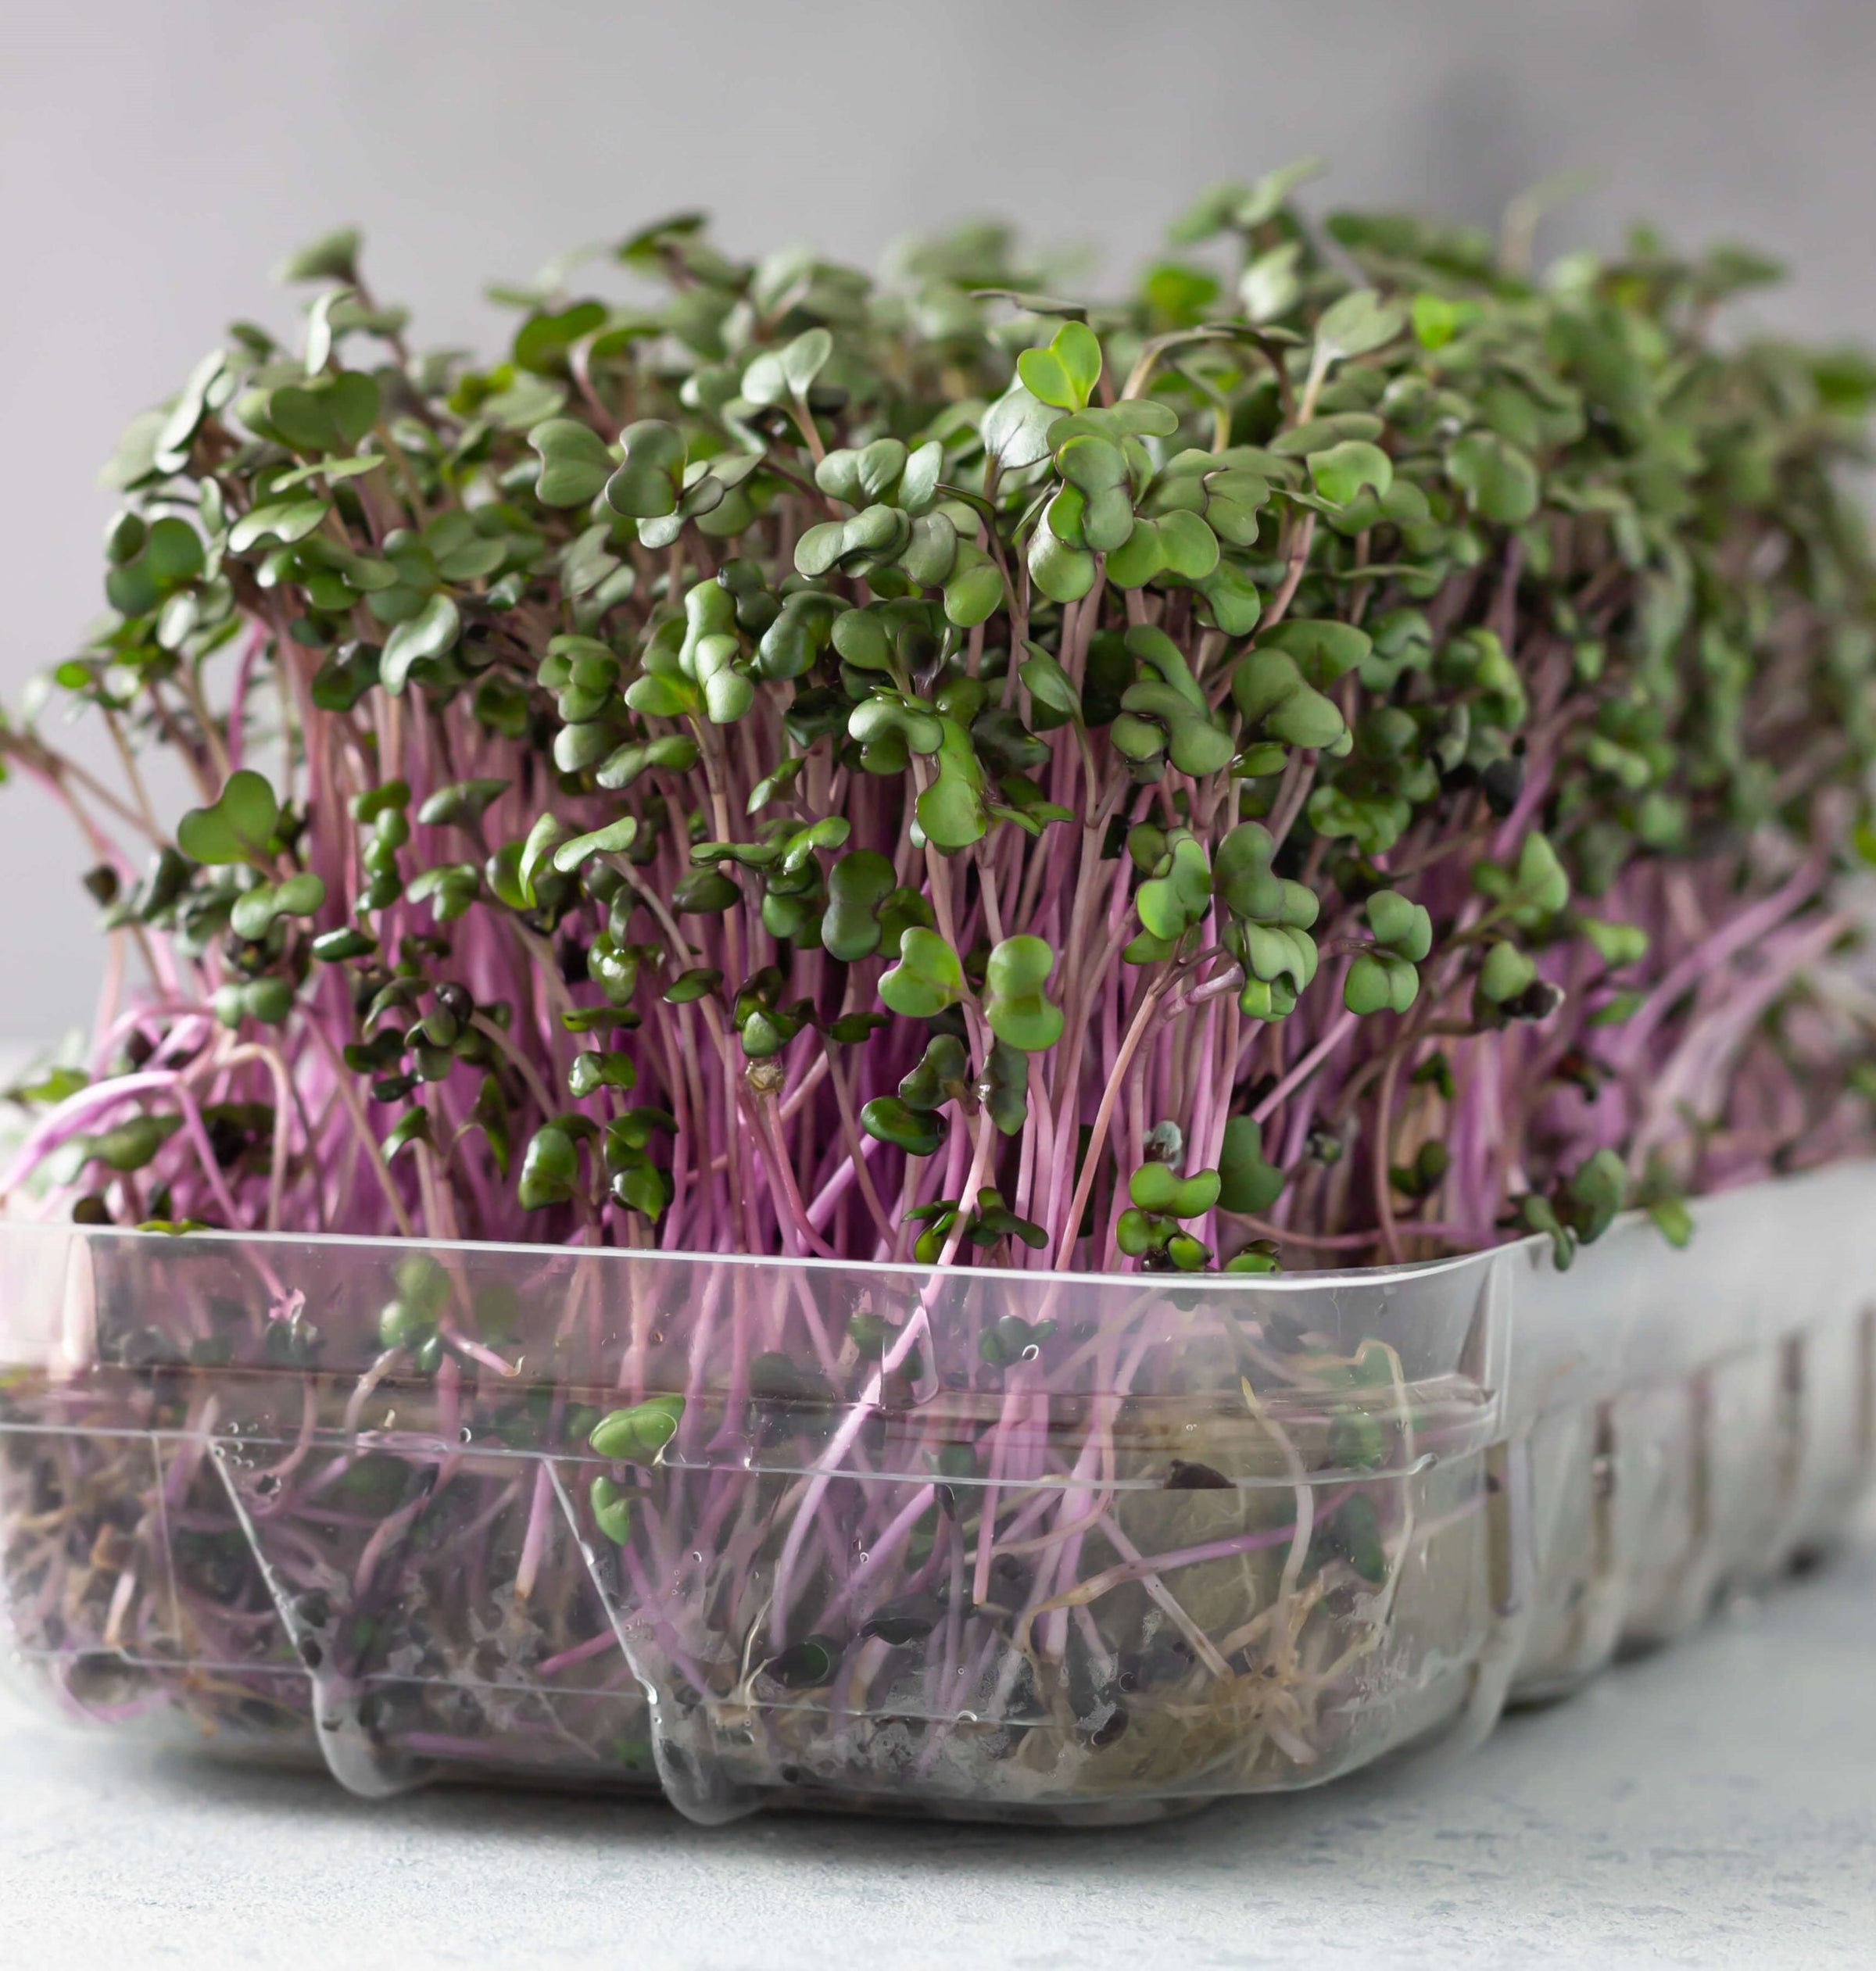 microgreens seeds growing in tray 